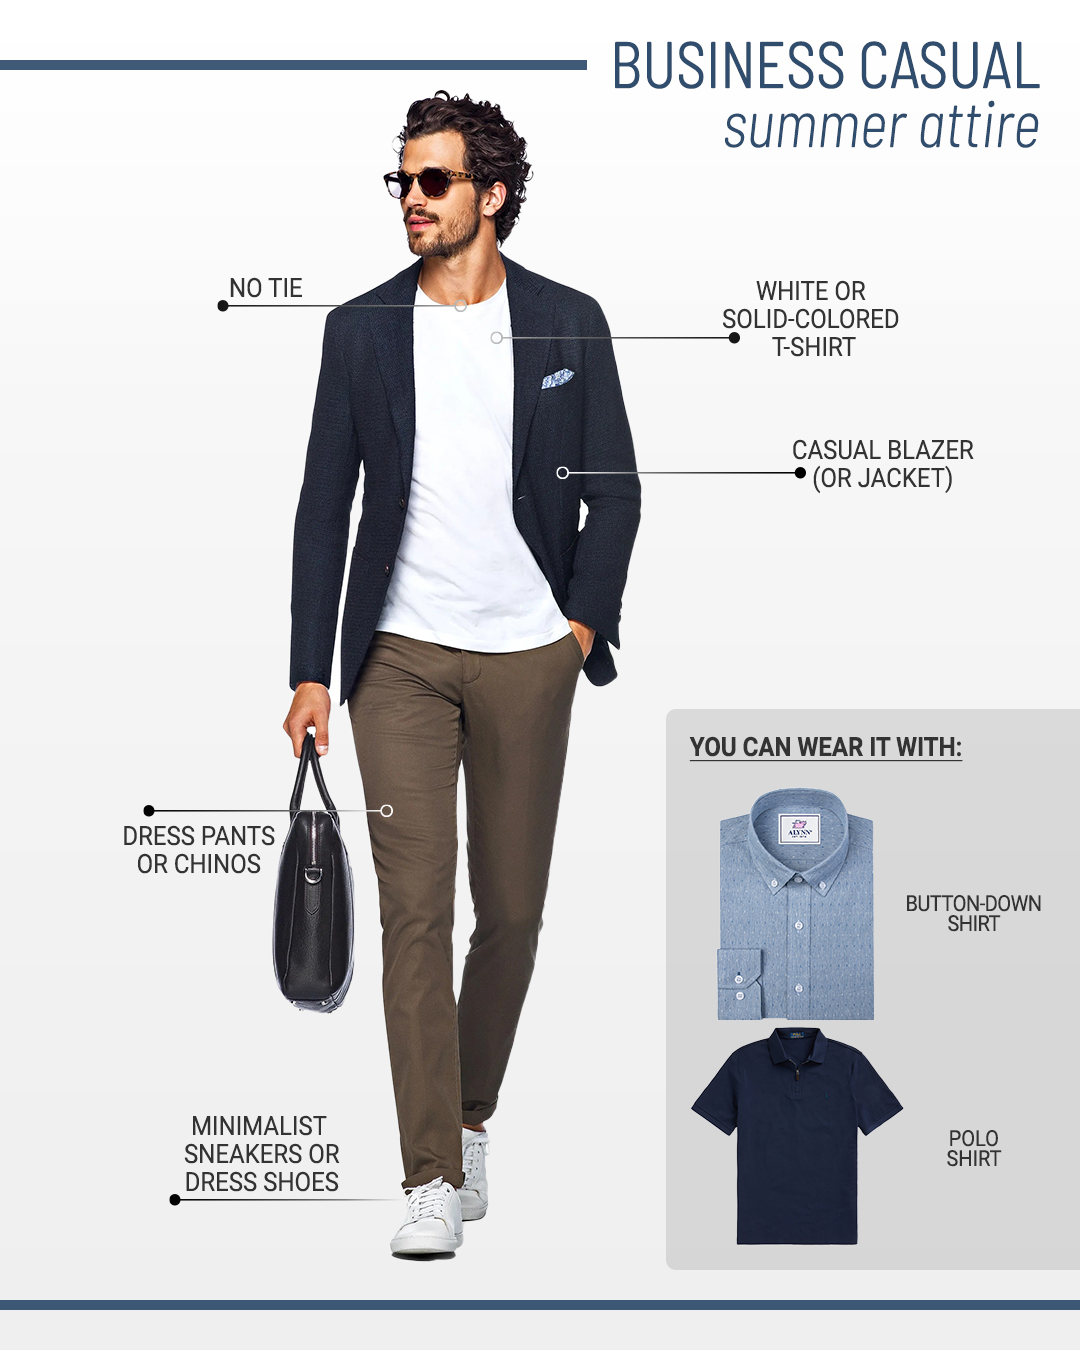 Business-casual summer attire for men